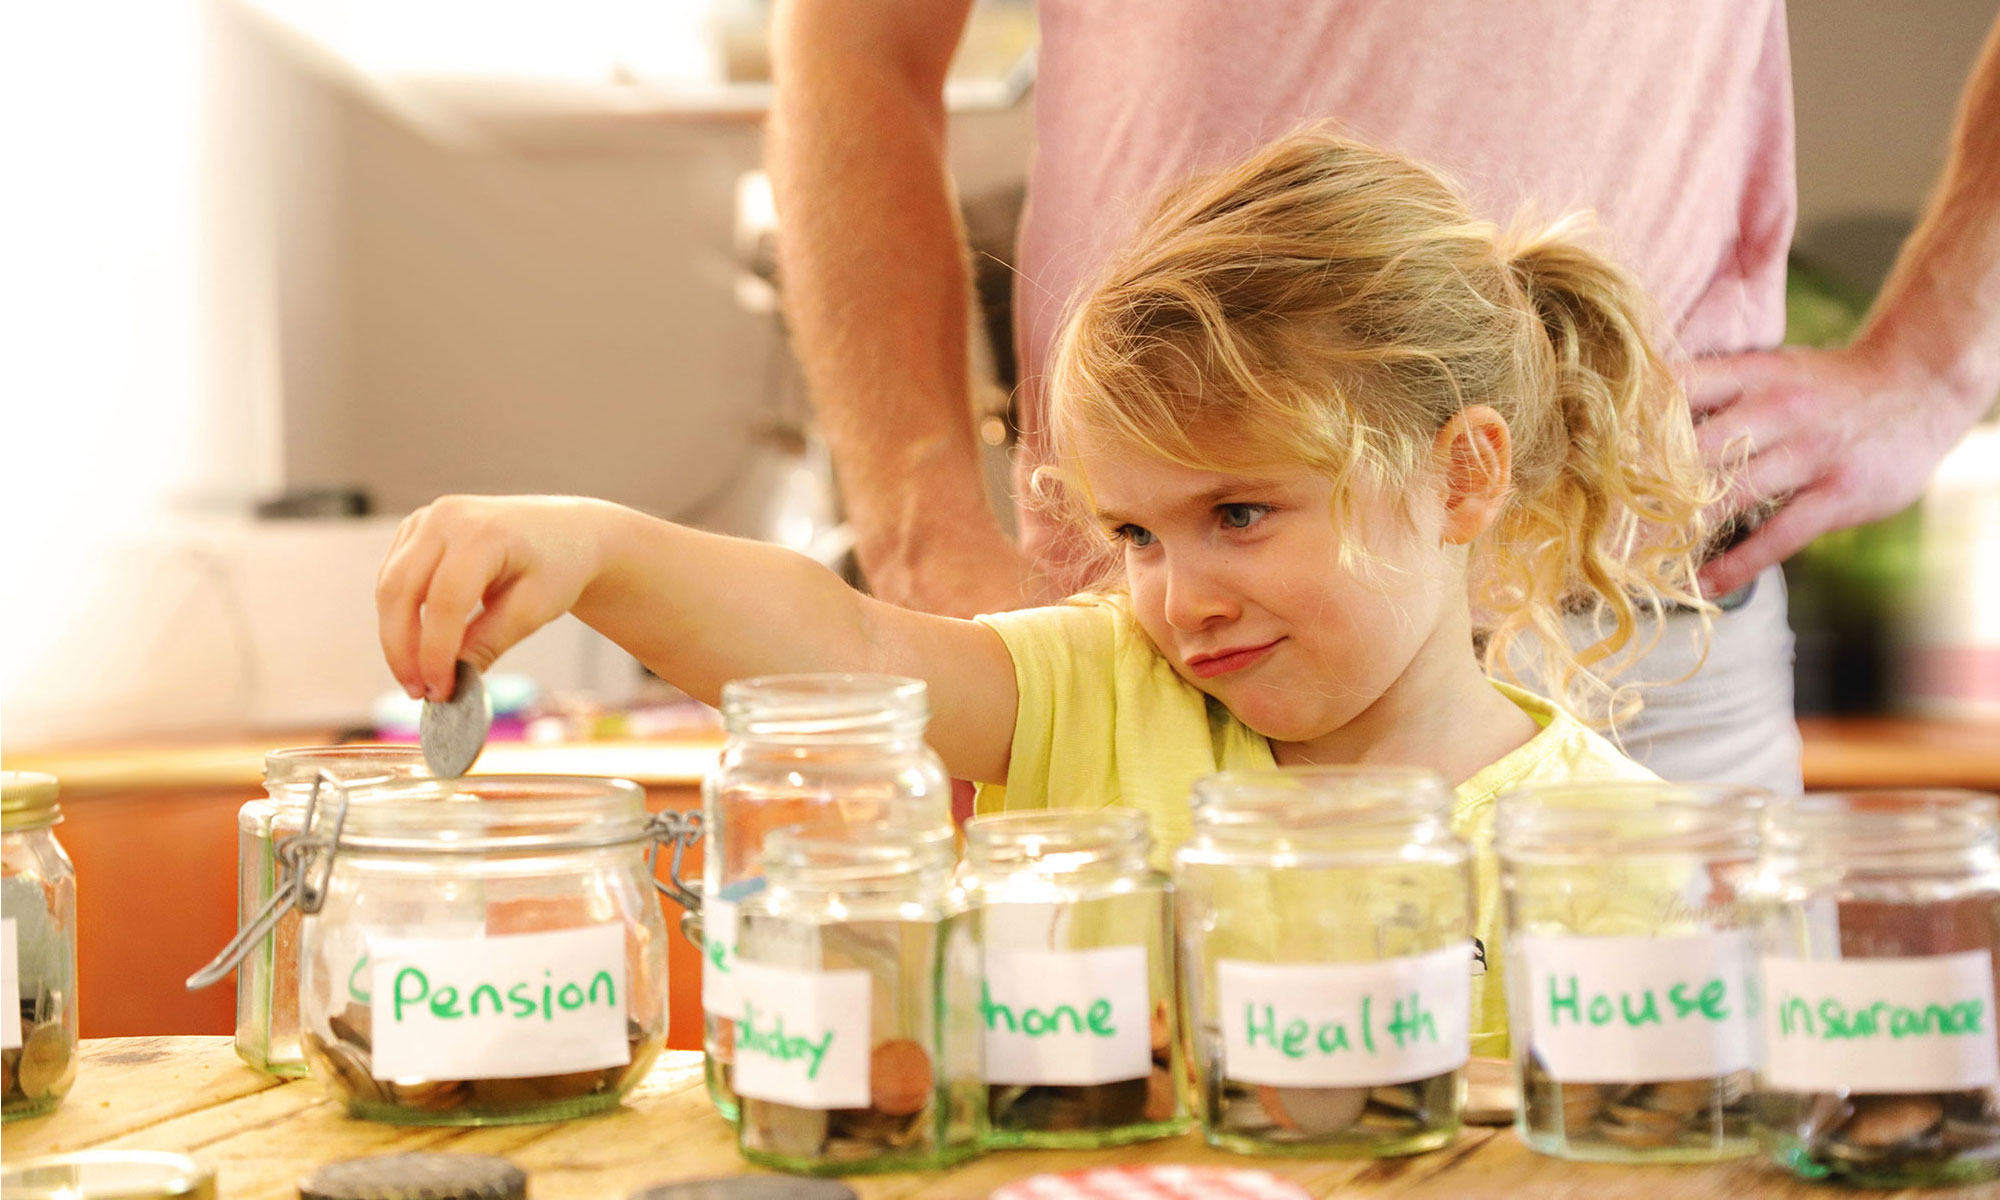 Little girl portioning out her pocket money in labelled jars